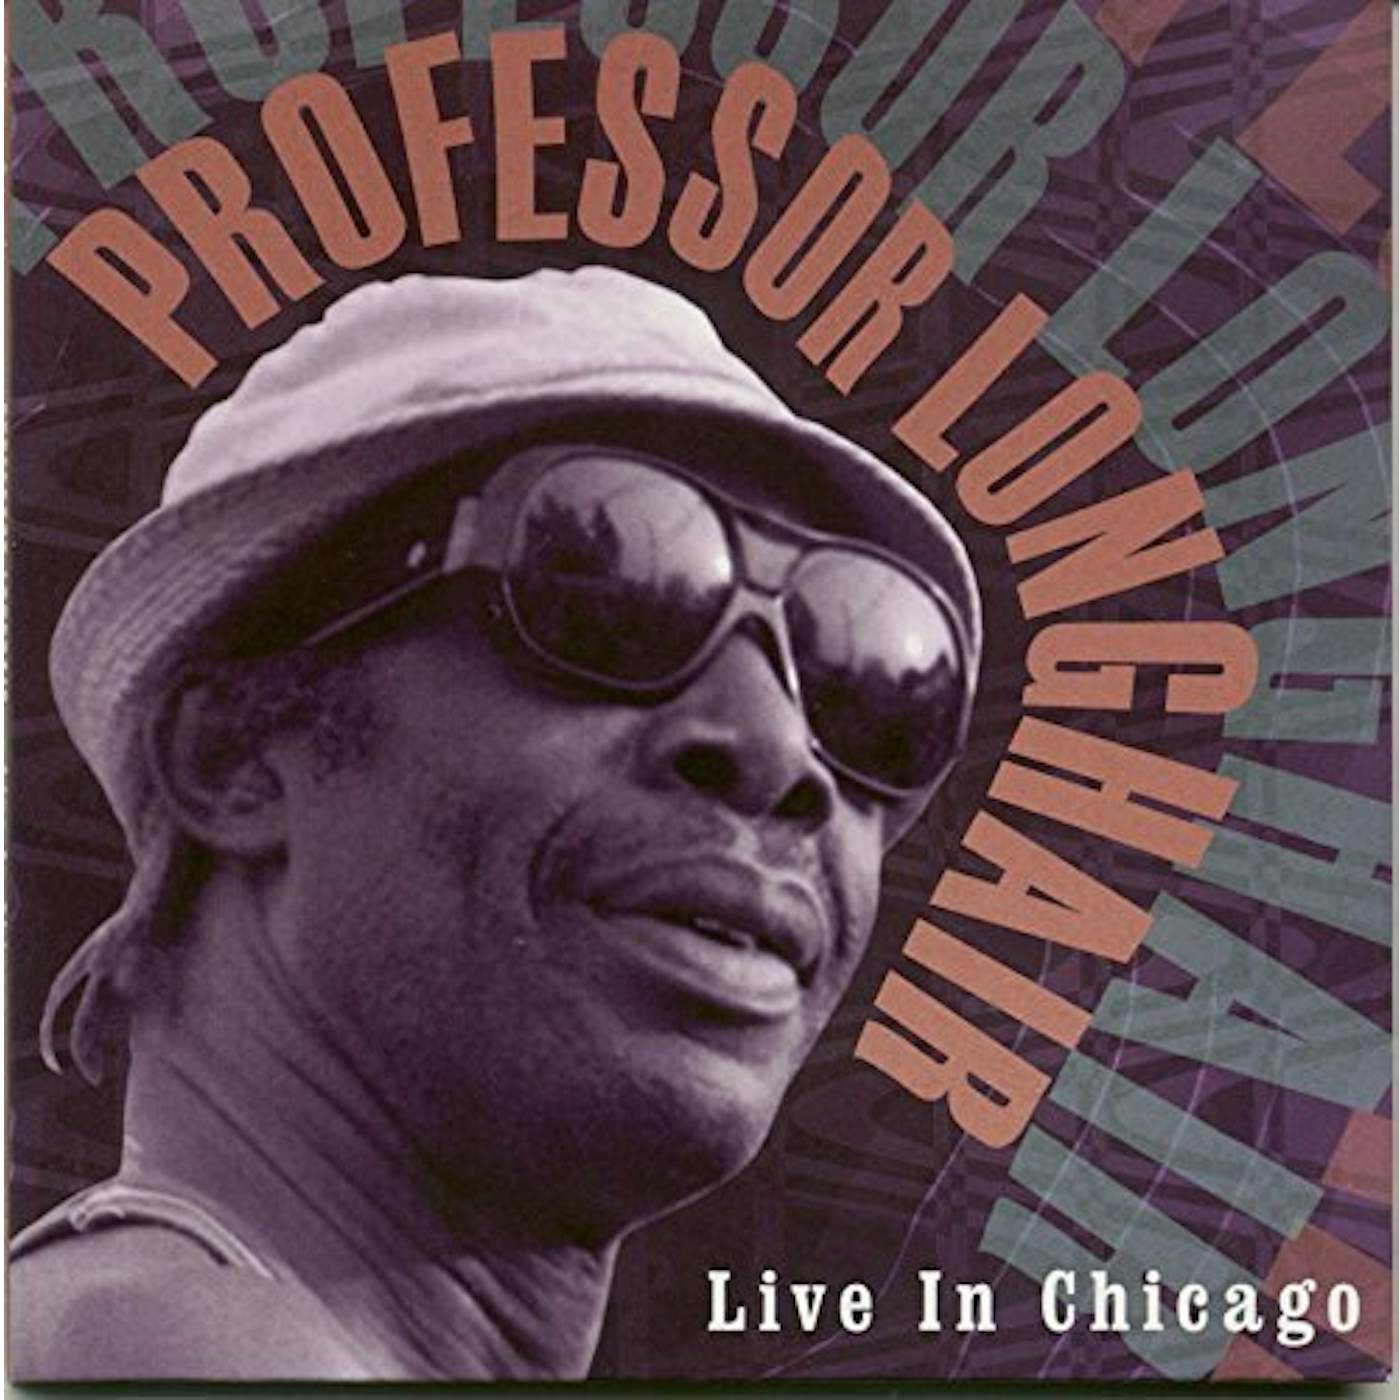 Professor Longhair LIVE IN CHICAGO CD